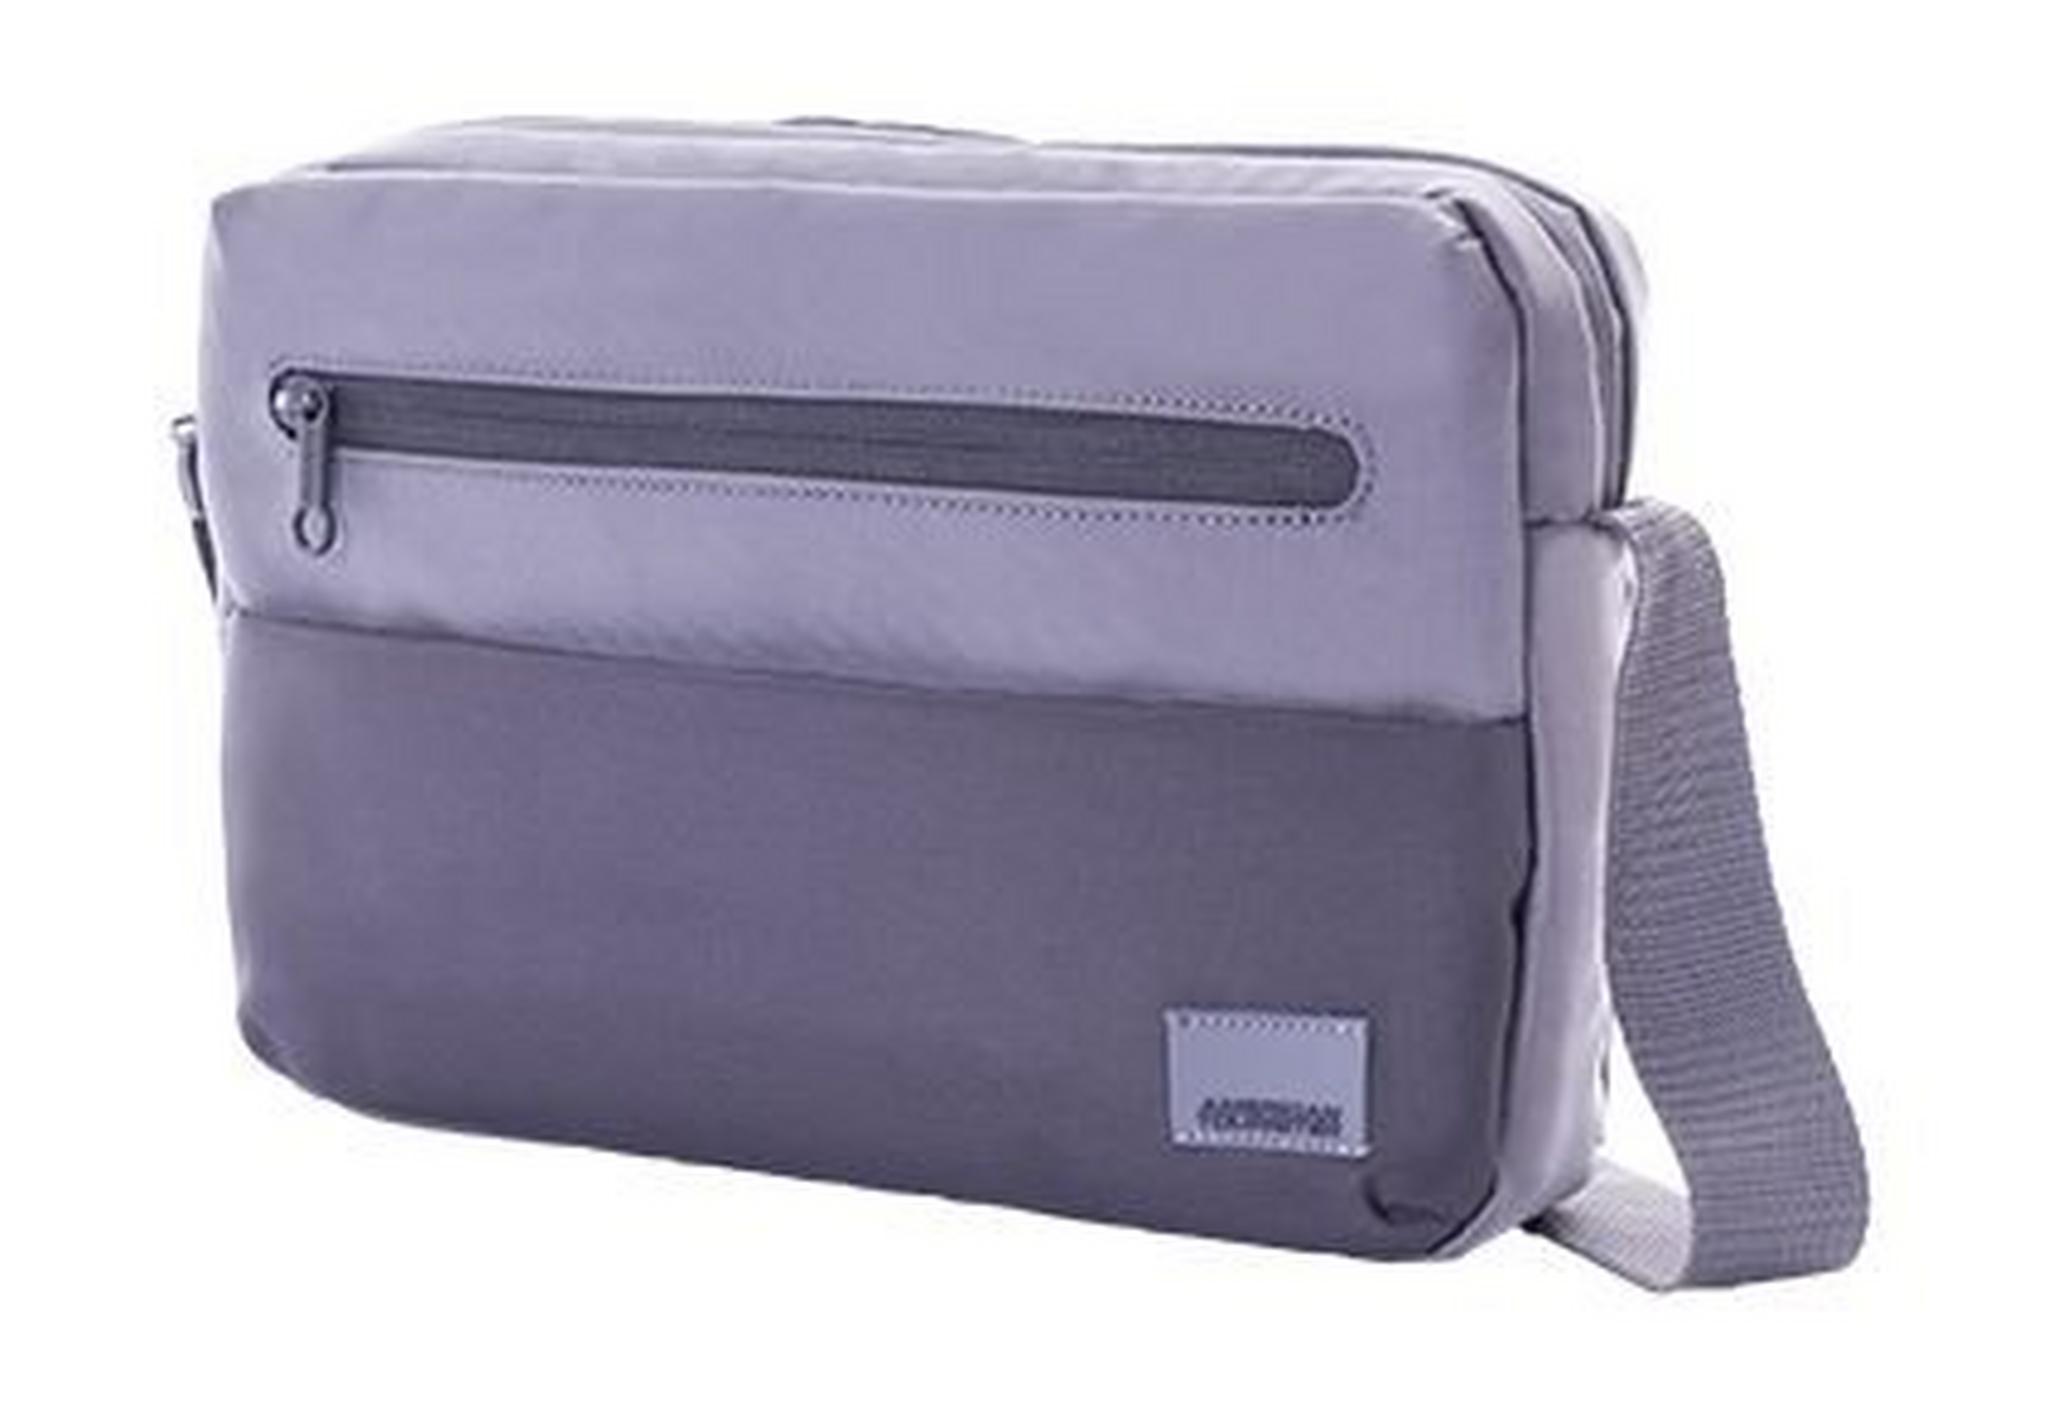 American Tourister Brixton Shoulder Bag (95SX18001) - Grey/Black